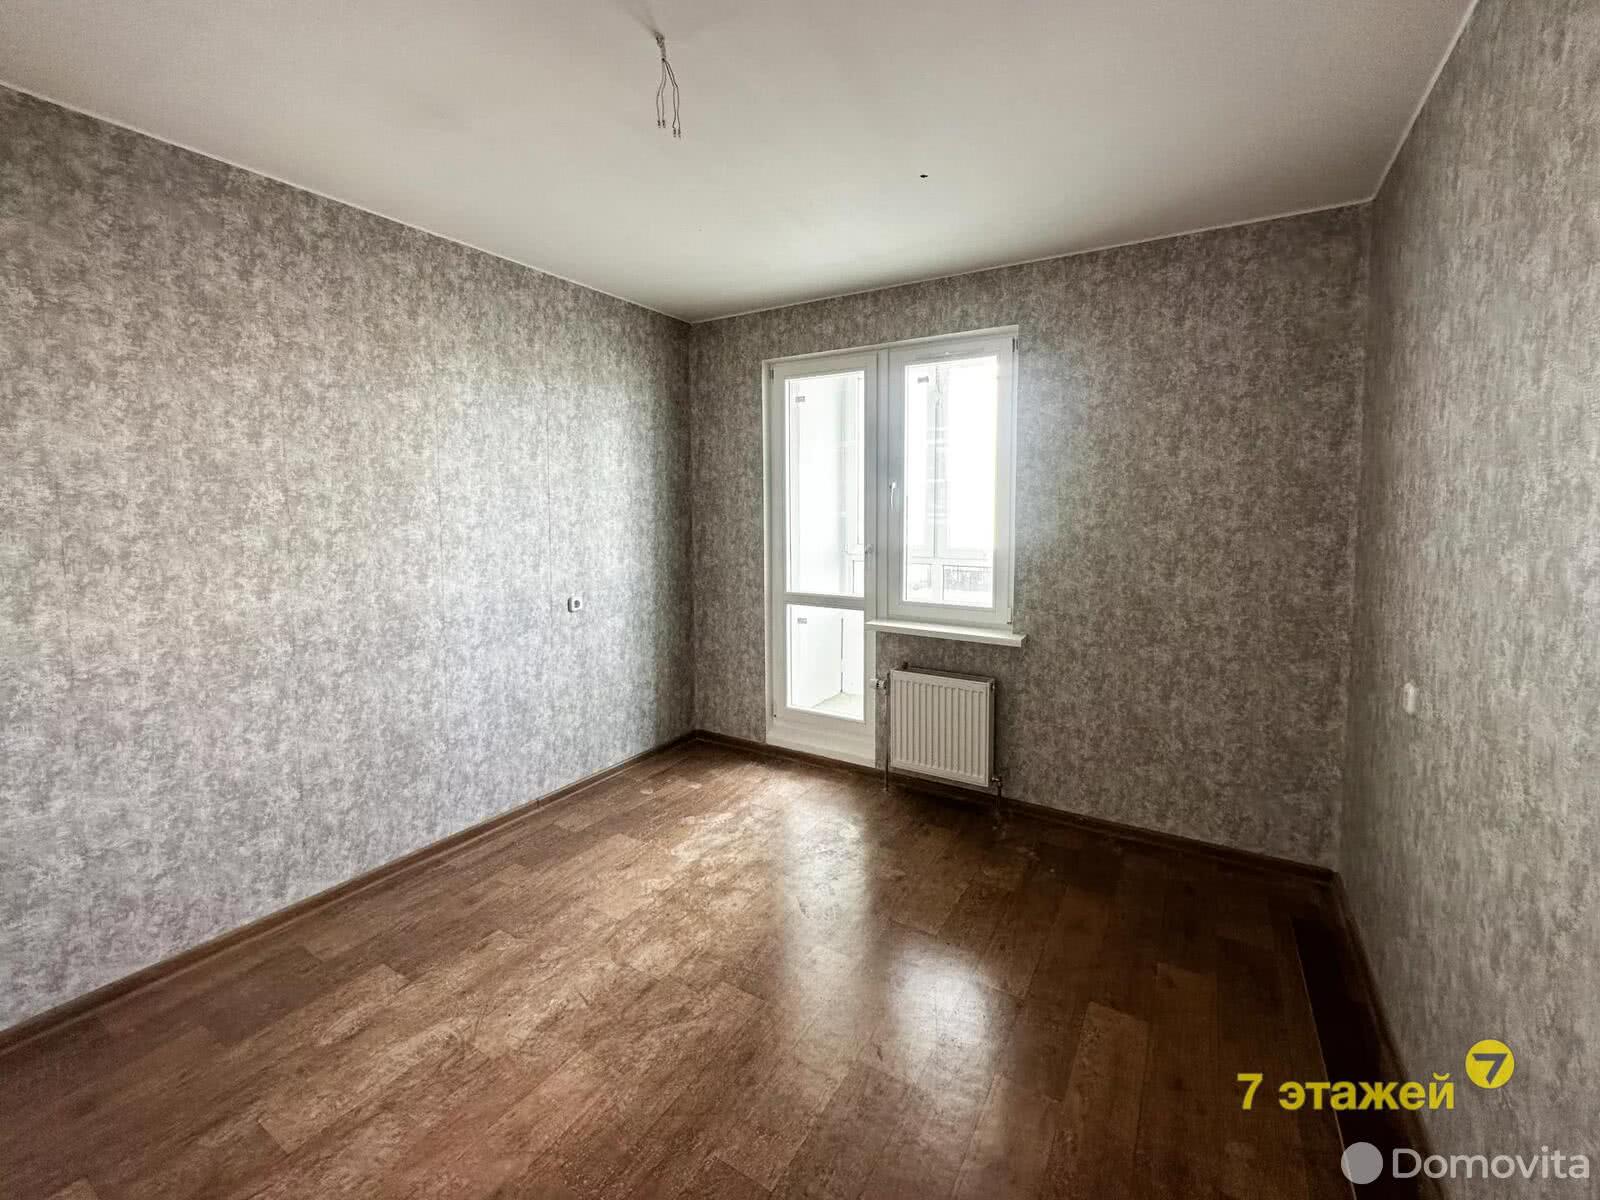 квартира, Минск, ул. Ромашкина, д. 32, стоимость продажи 287 205 р.